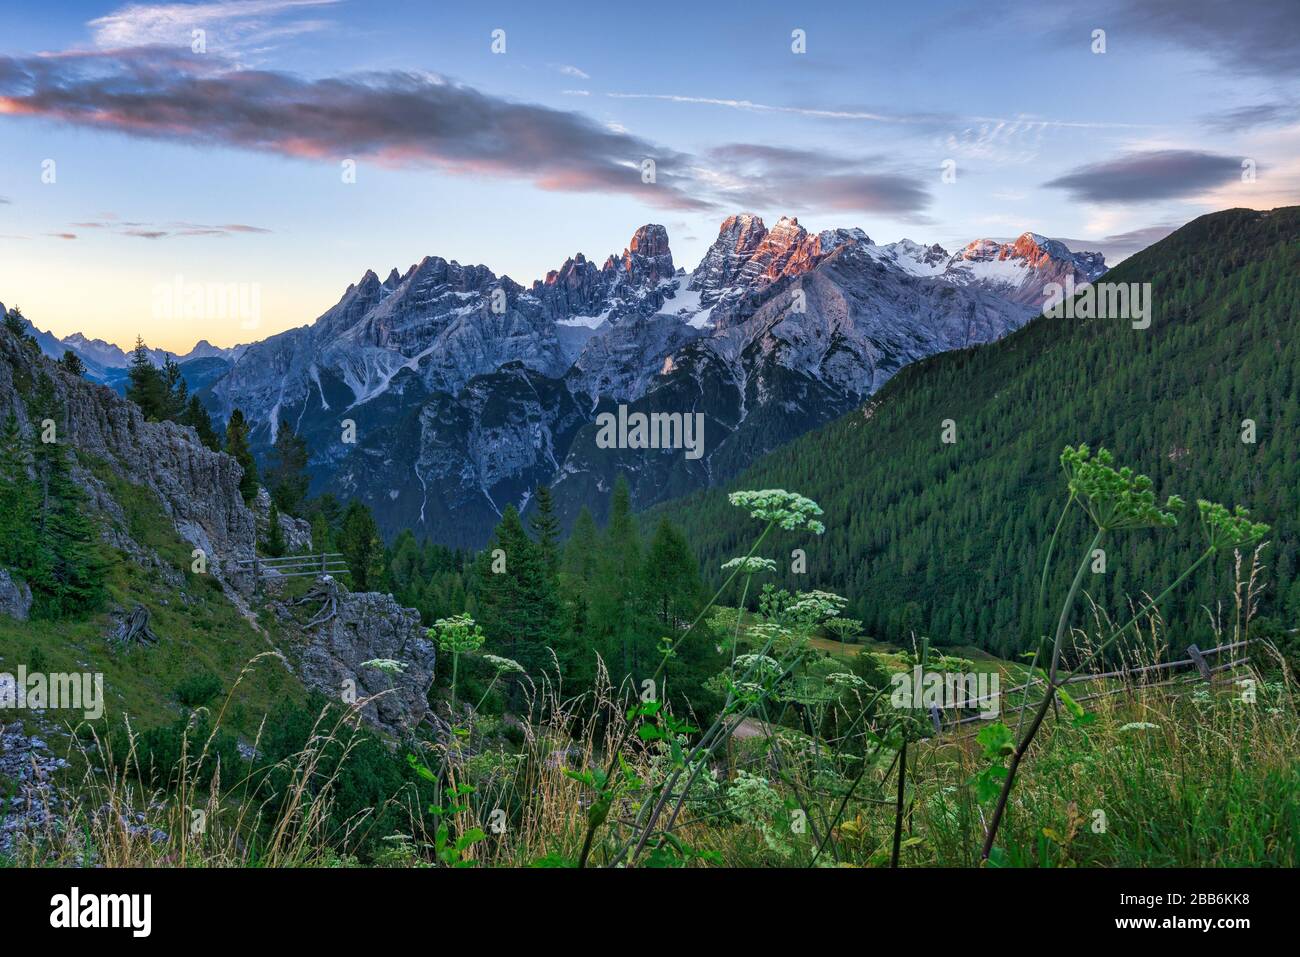 Cristallo Mountain Group, Cortina d'Ampezzo, Belluno, Veneto, Italy Stock Photo